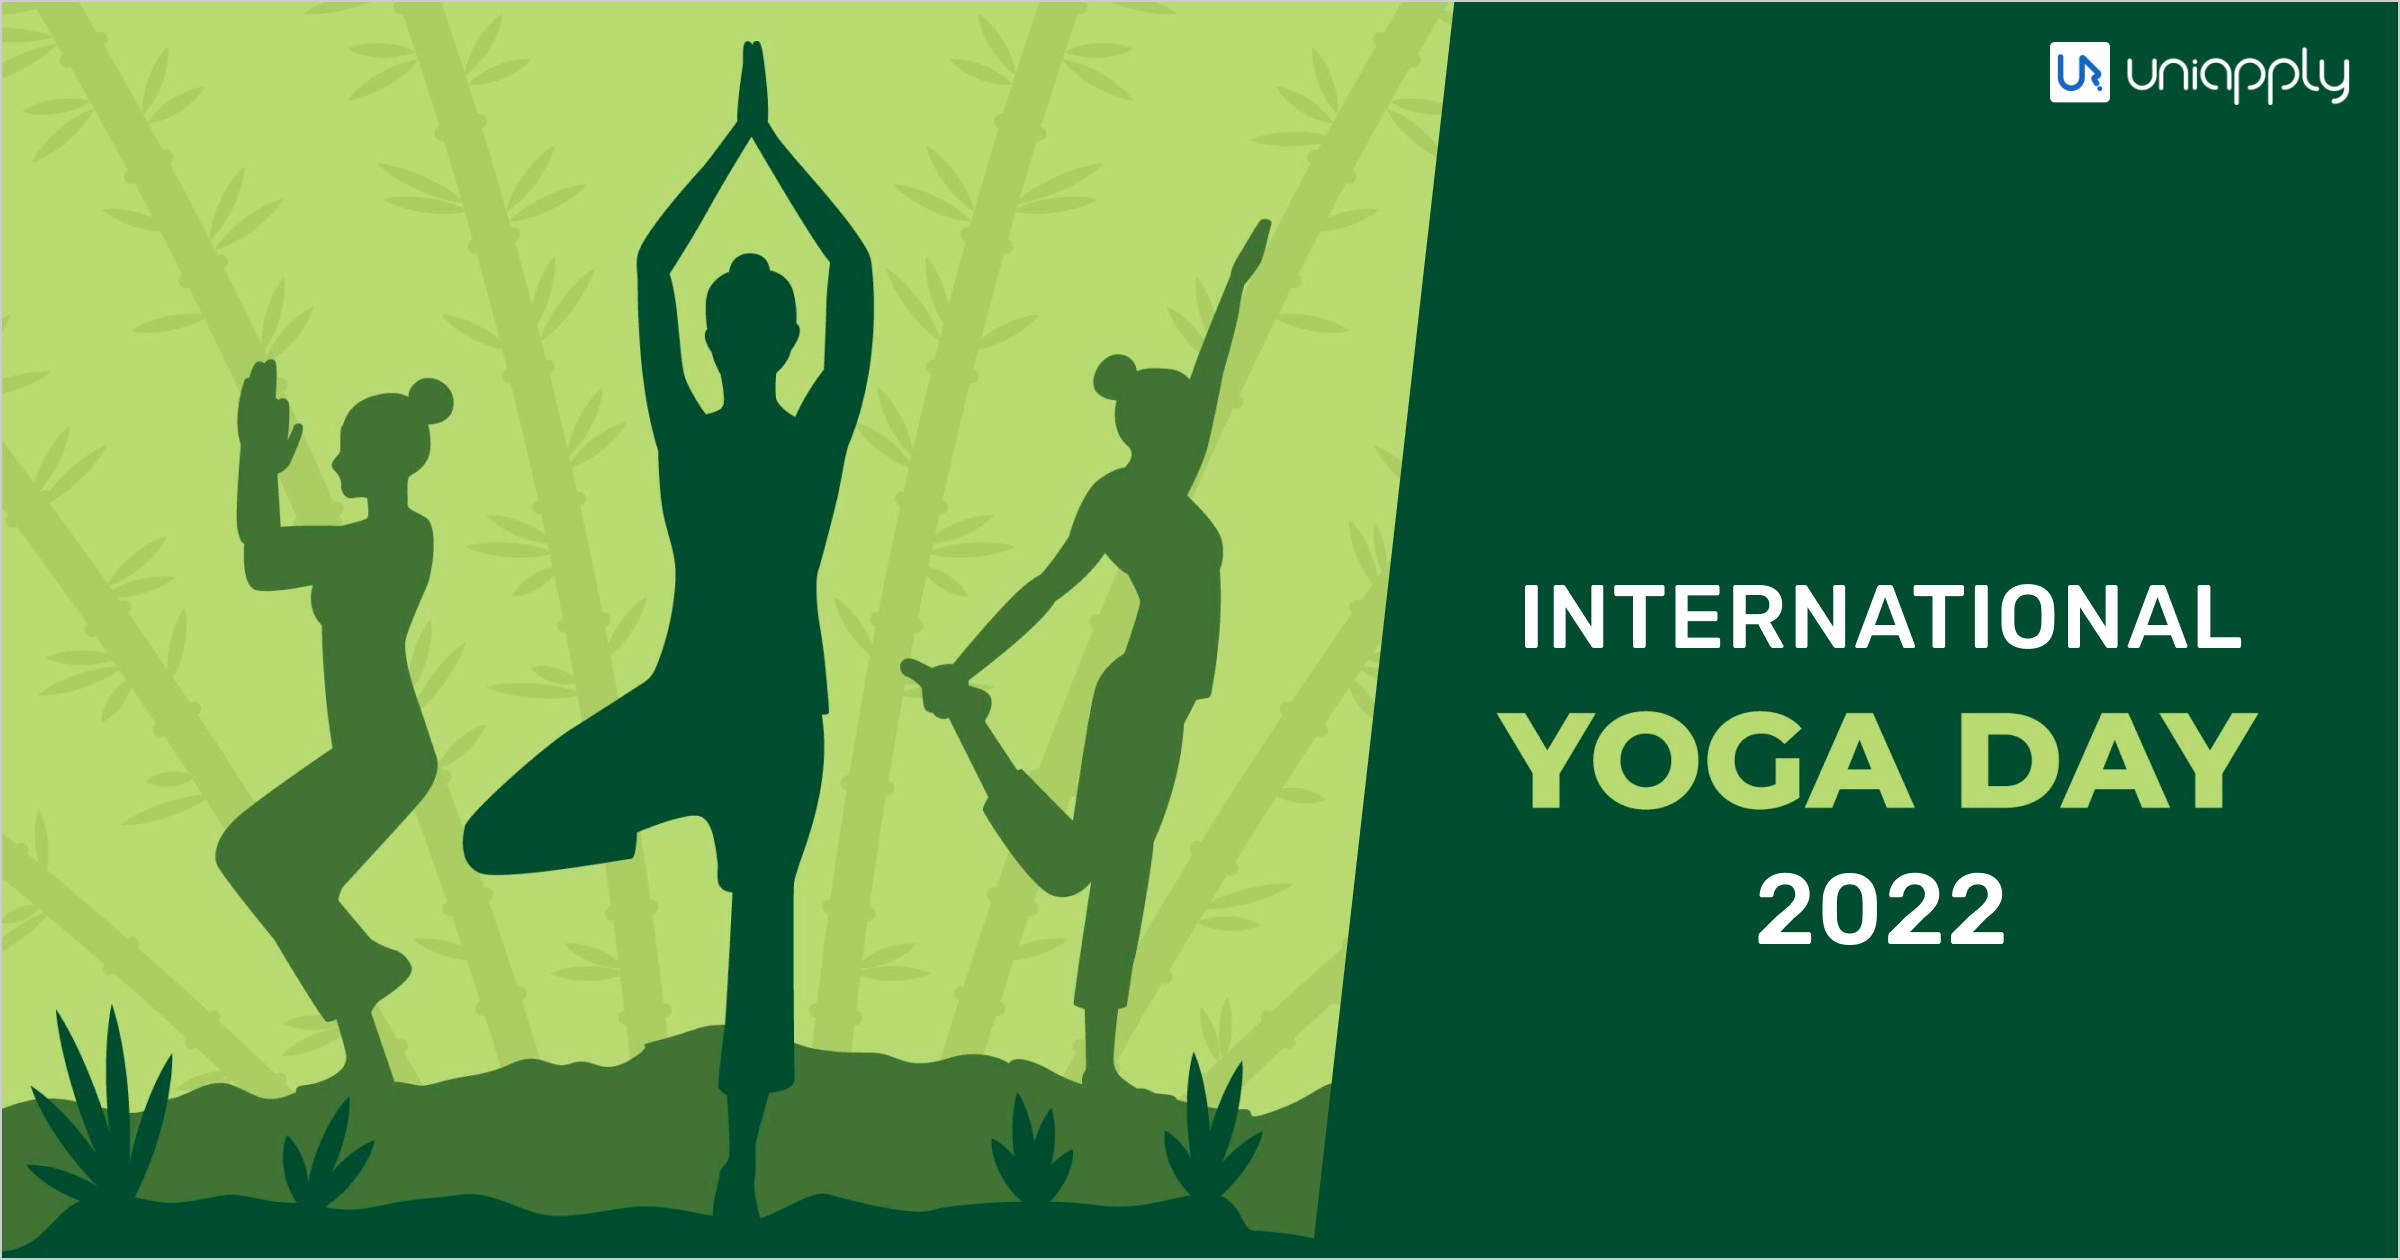 Yoga Day 2022: Origin, development and international recognition